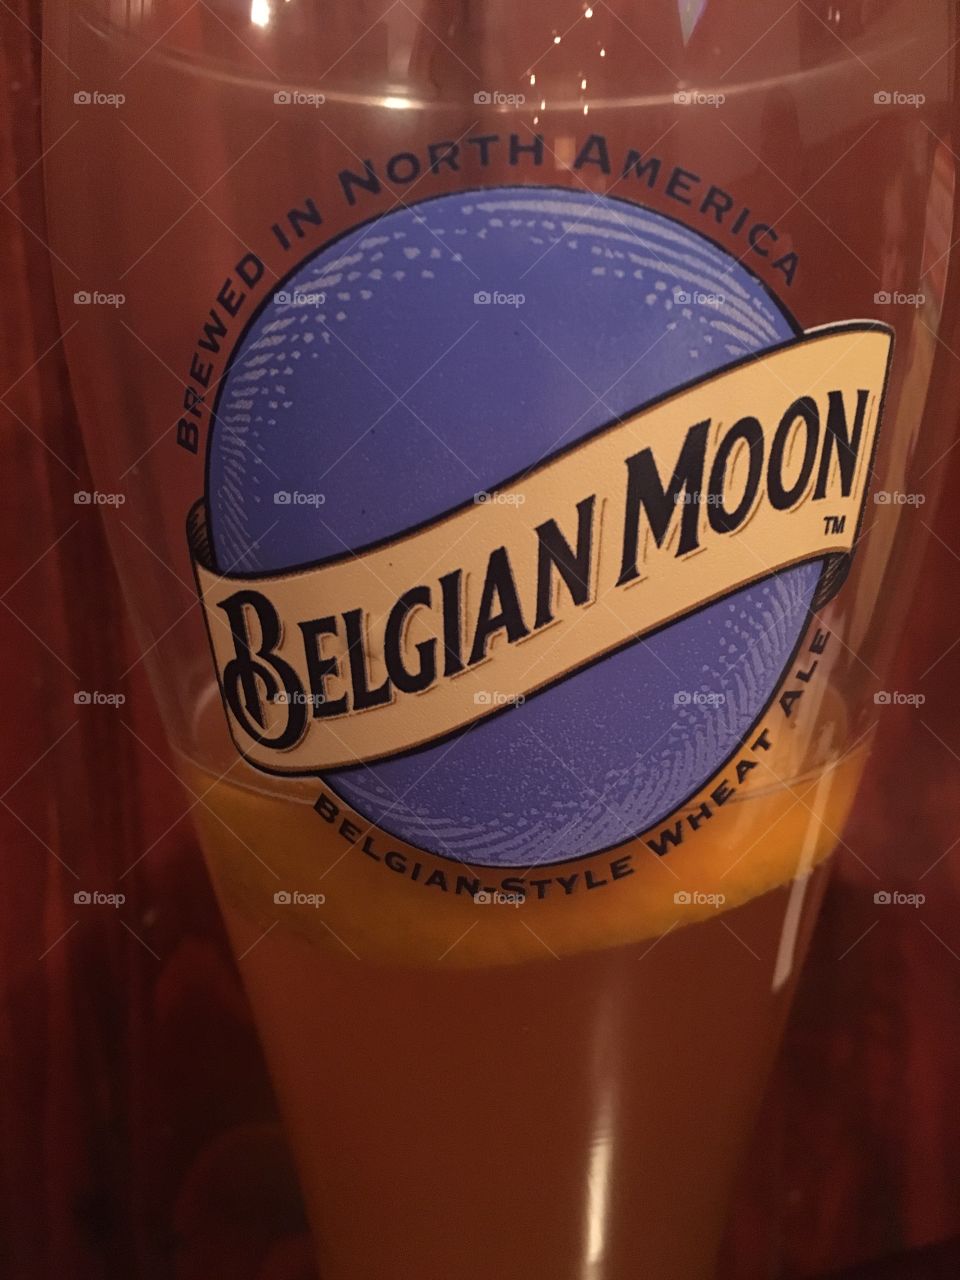 Belgian moon draft beer